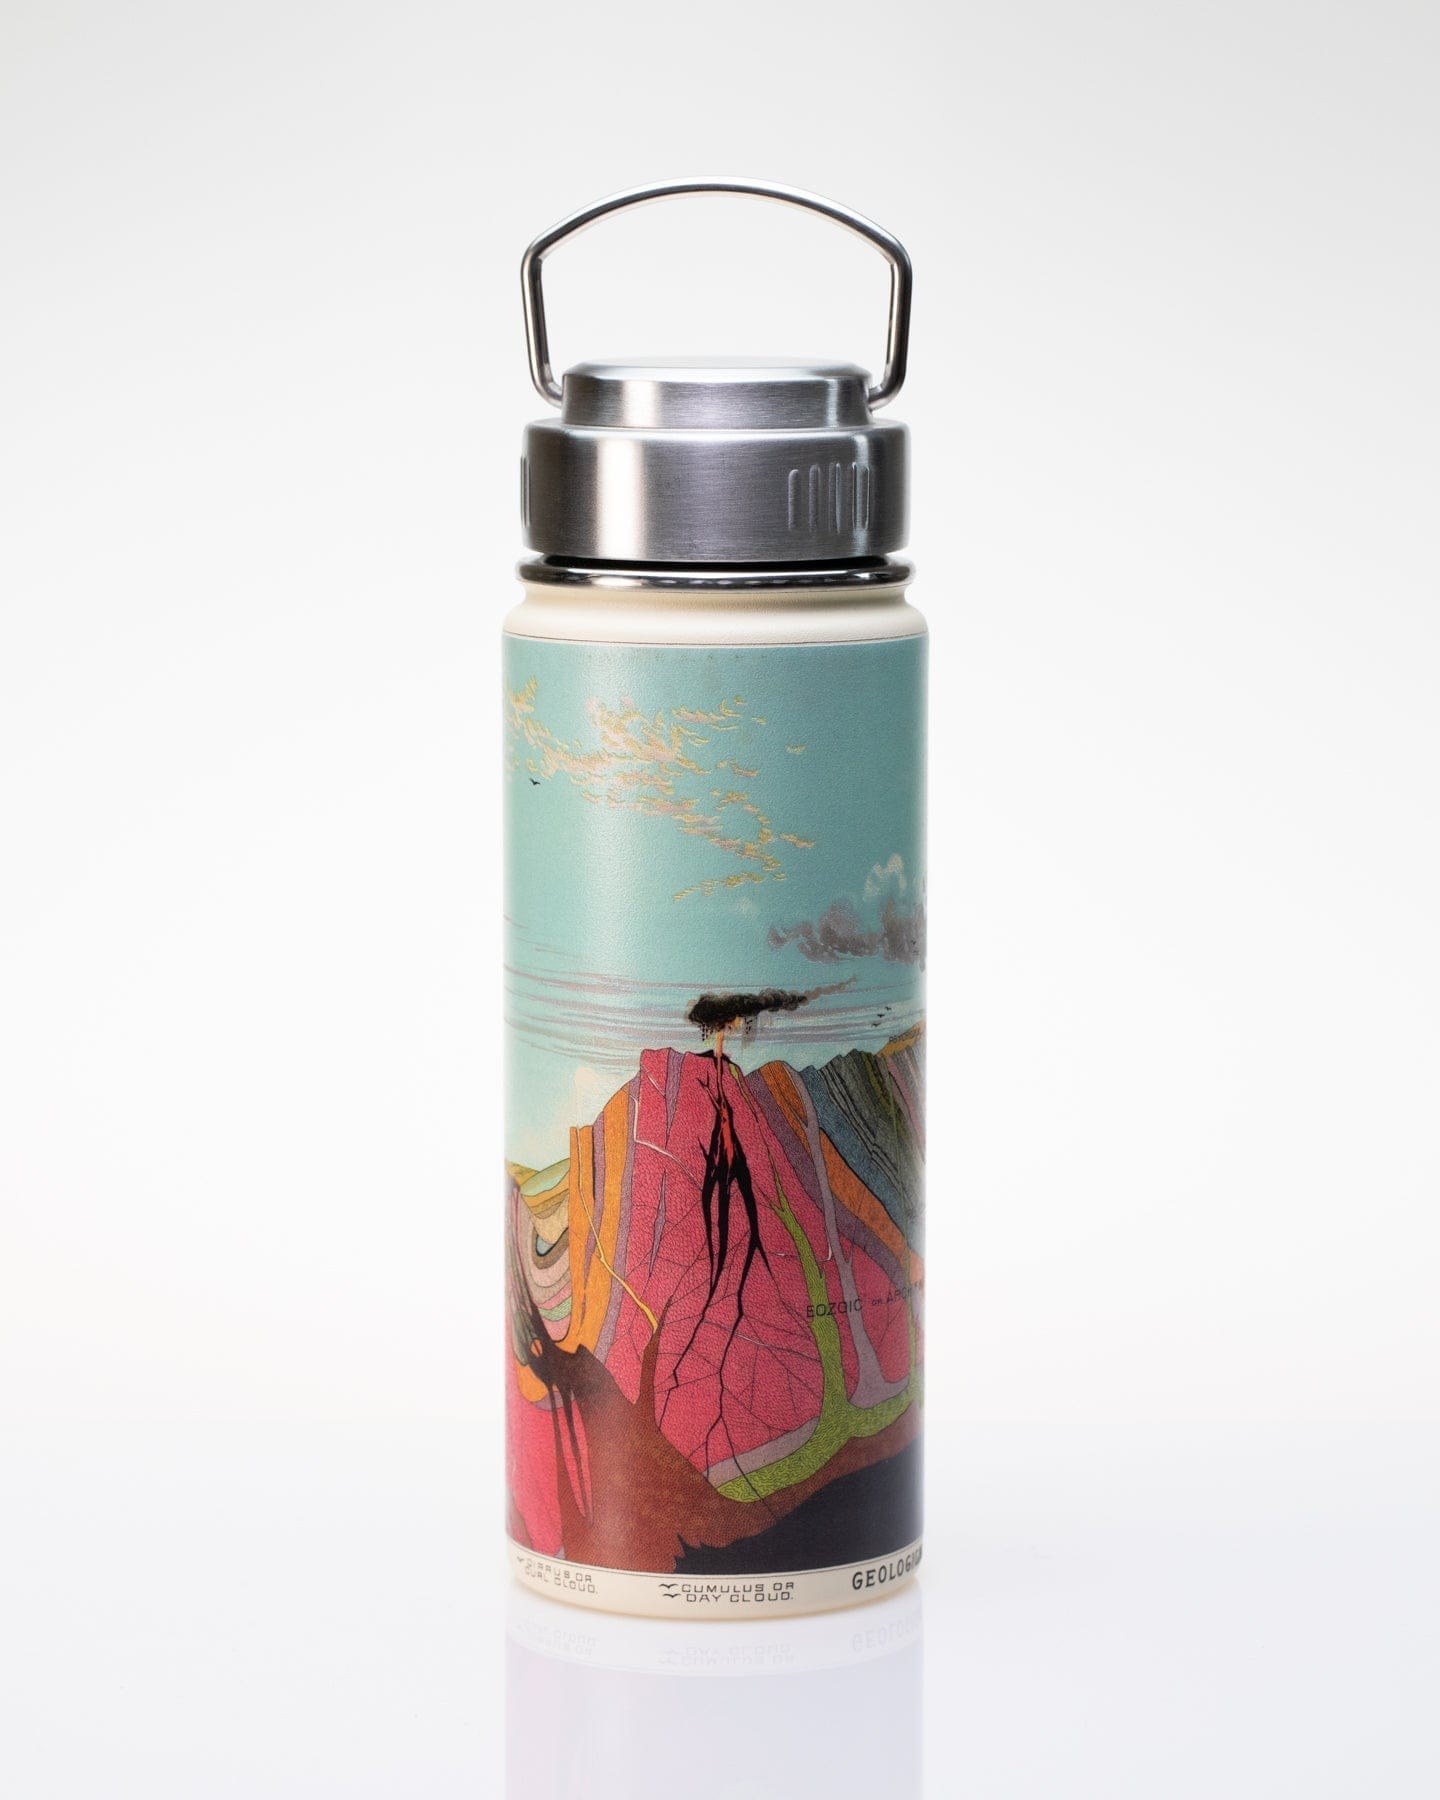  Star Wars Thermos Flask 515 ml : Home & Kitchen